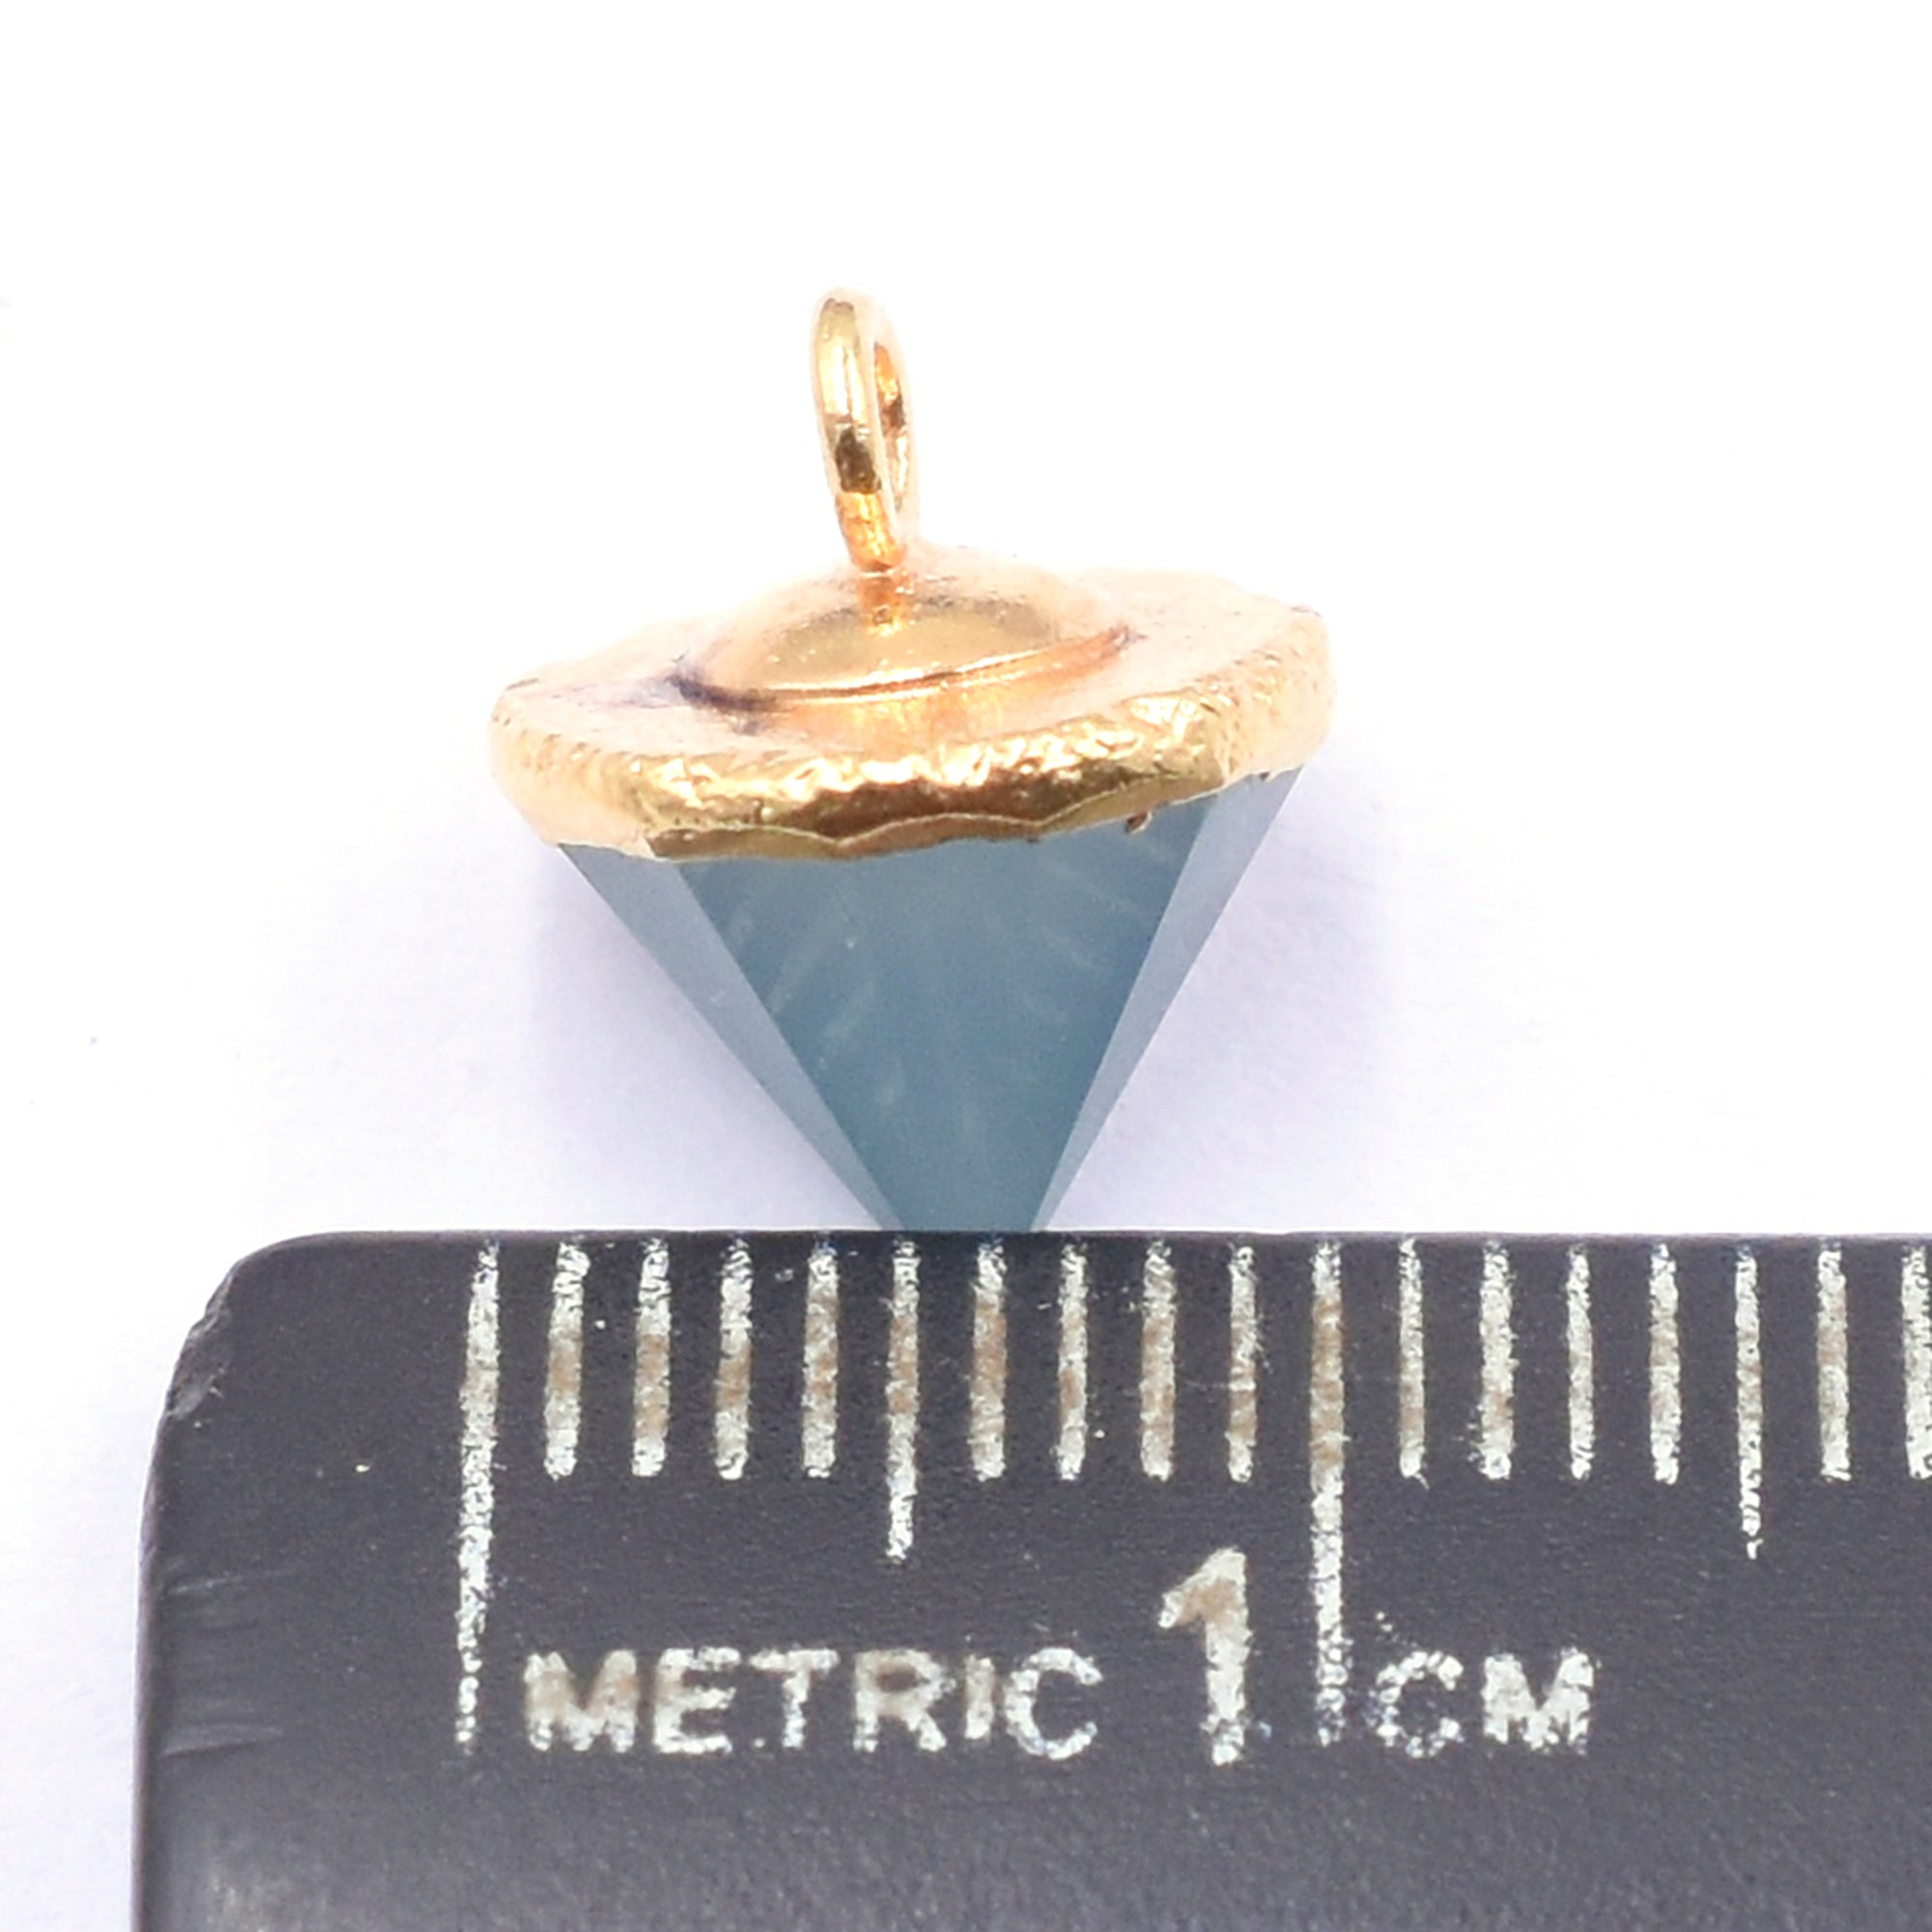 Aqua Chalcedony 9X10 MM Cone Shape Gold Electroplated Pendant (Set Of 2 Pcs) - Jaipur Gem Factory